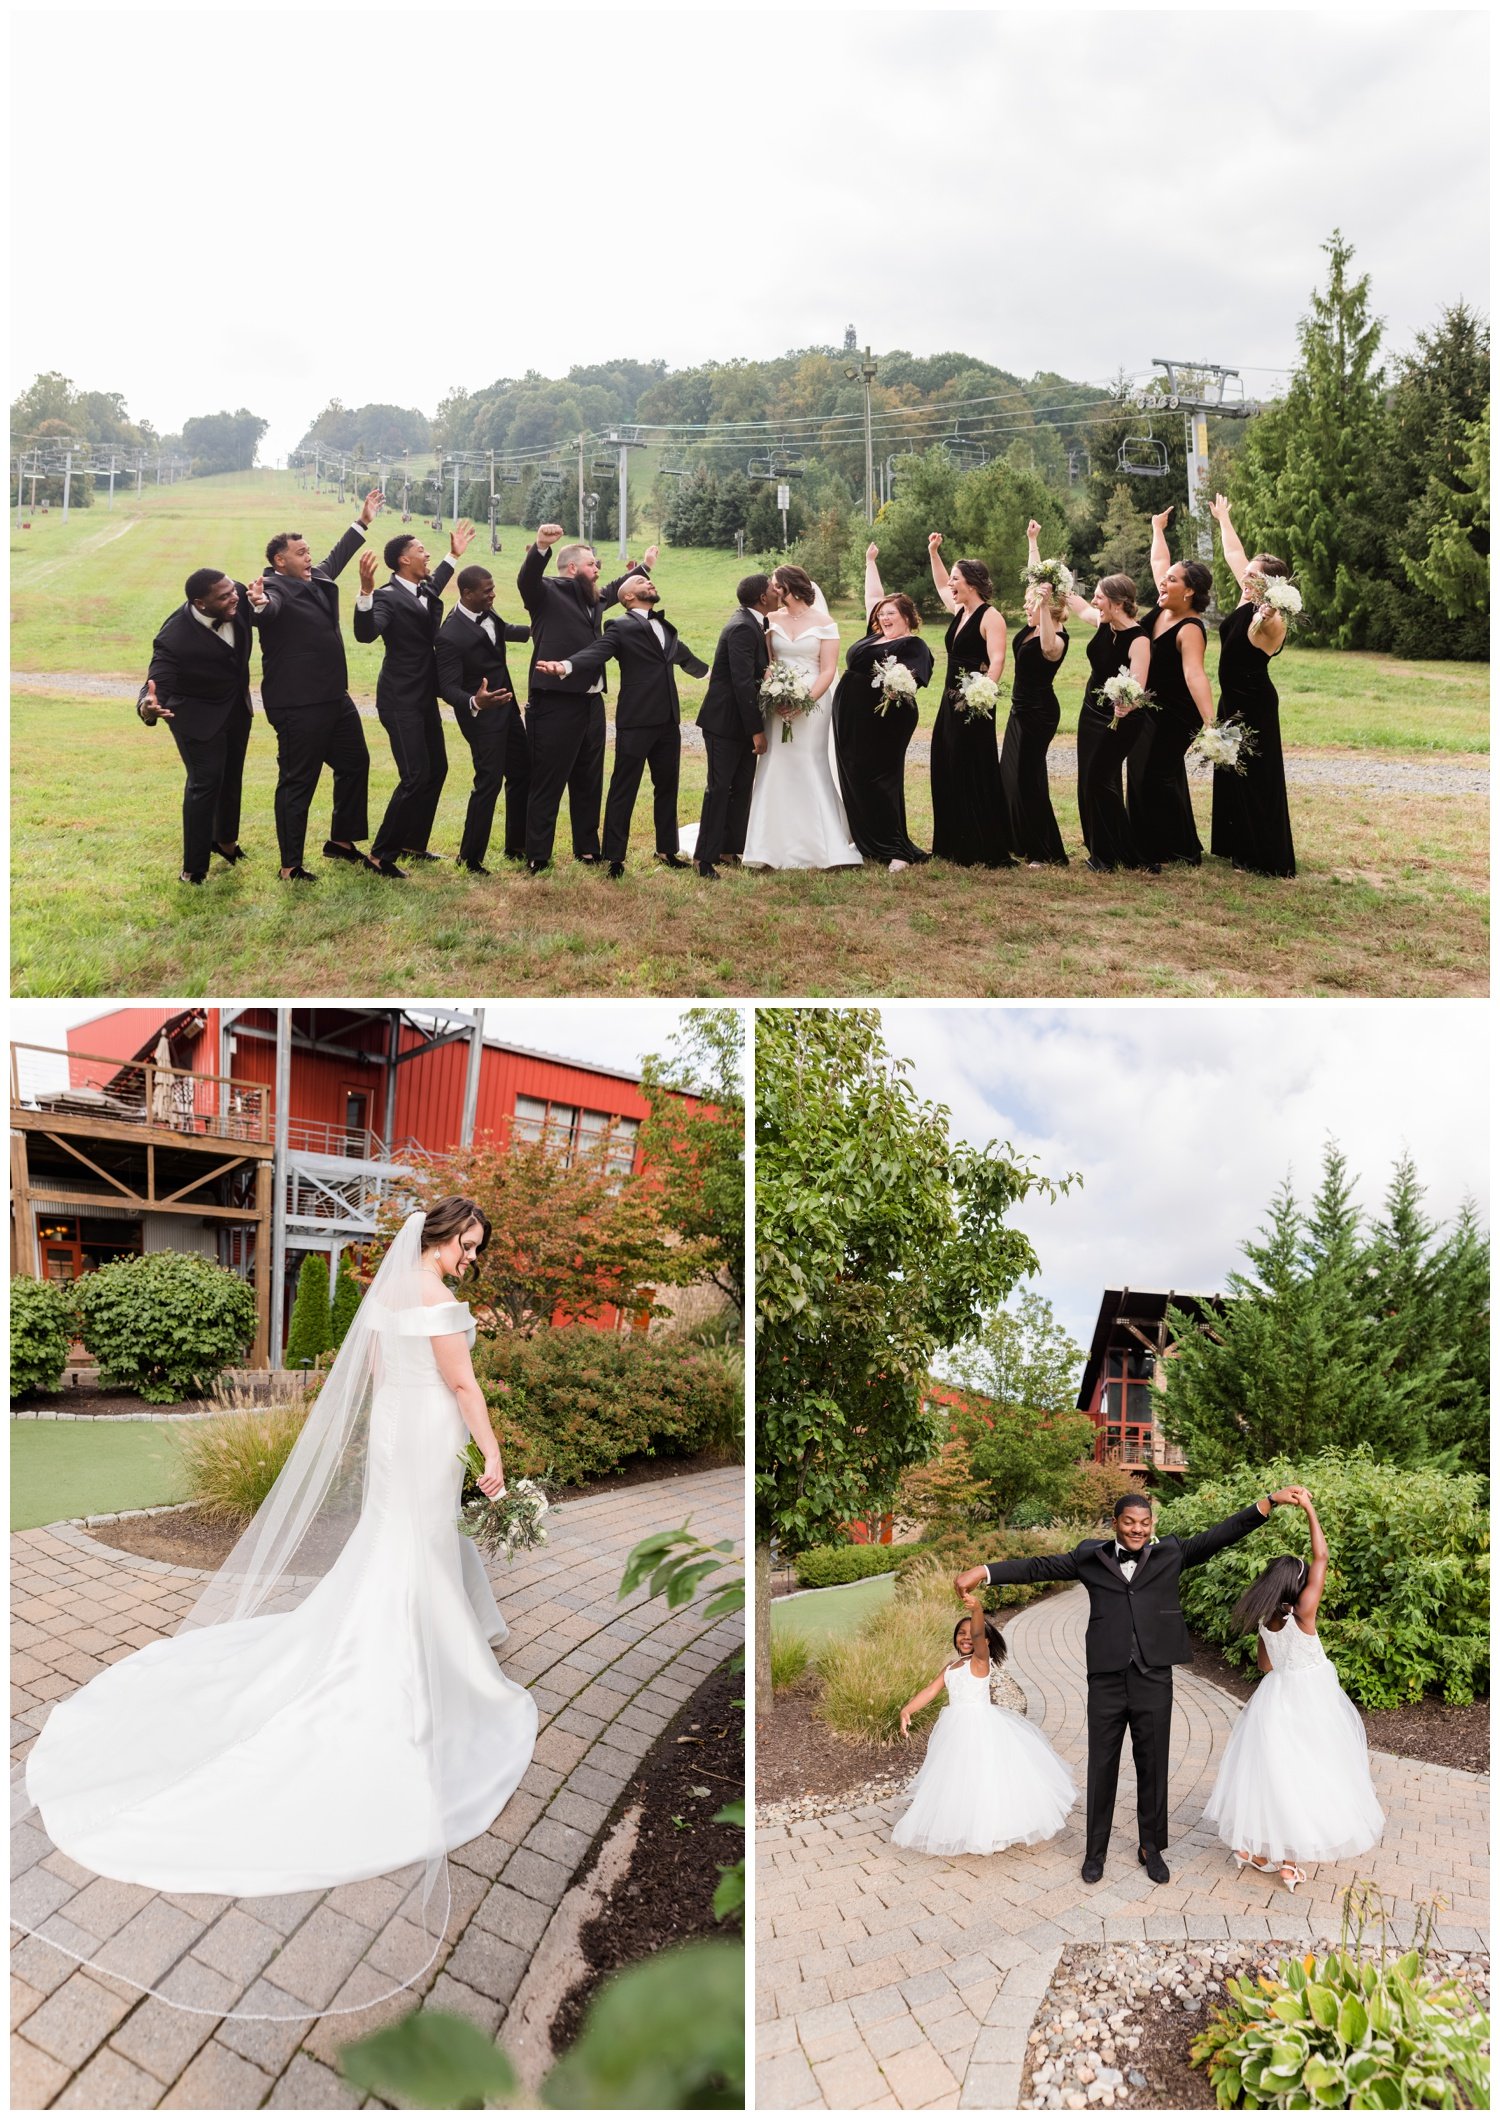 Bear-Creek-Mountain-Resort-Fall-Wedding-by-Swiger-Photography-16.jpg